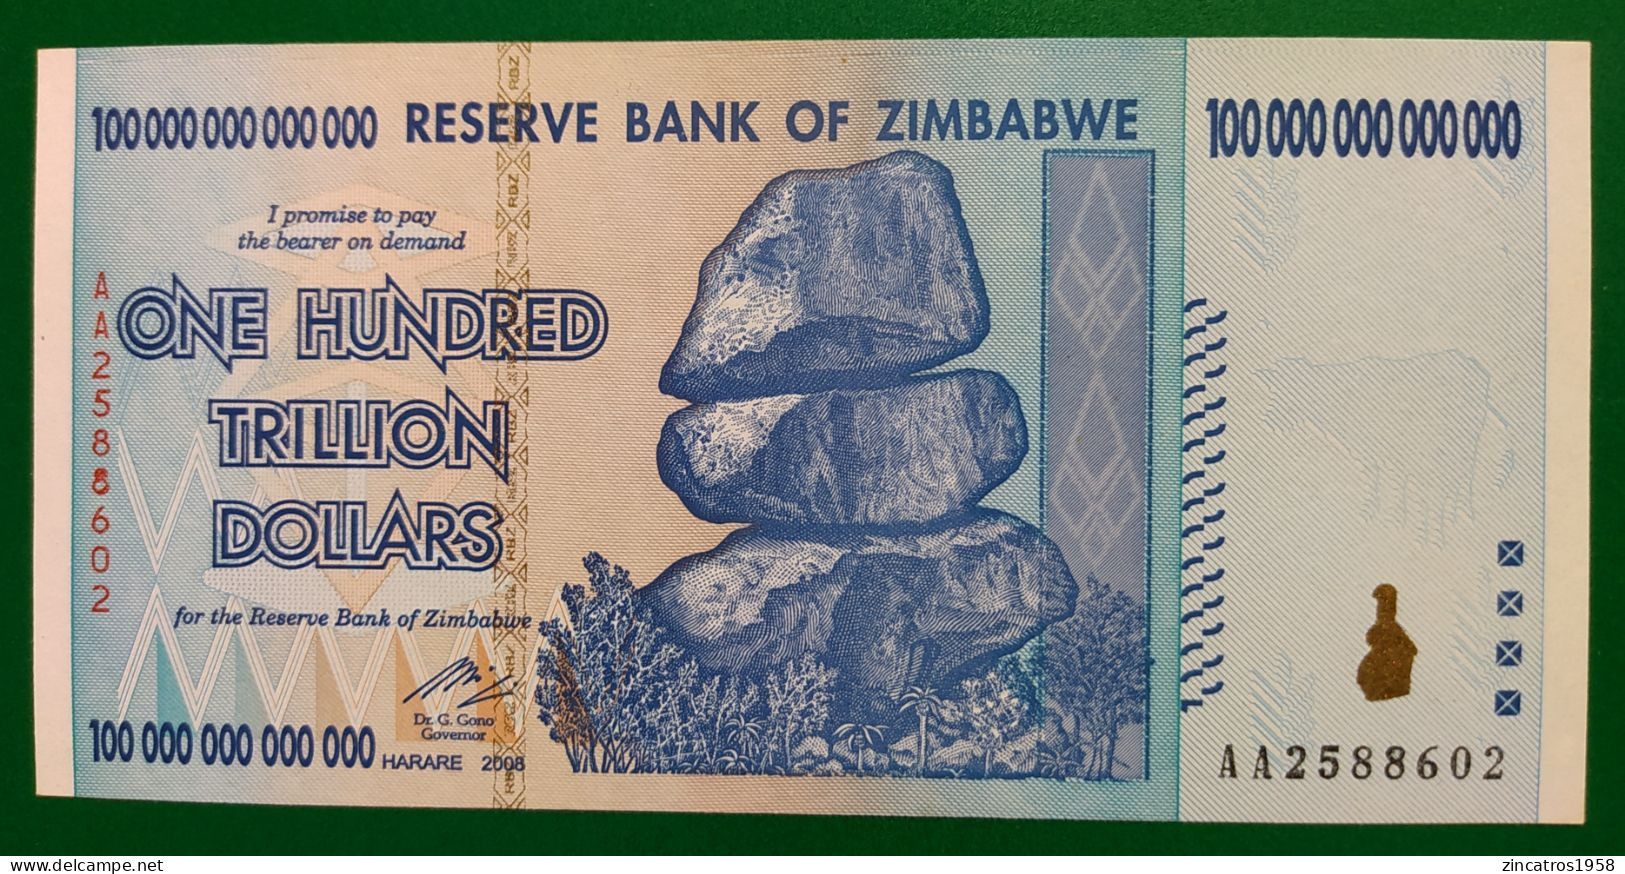 Zimbabwe / 100 Trillion Dollars 2008 P. 91 / 100 % UNC Original AA Serie / Top Price ++ Highest Denomination World +++++ - Zimbabwe